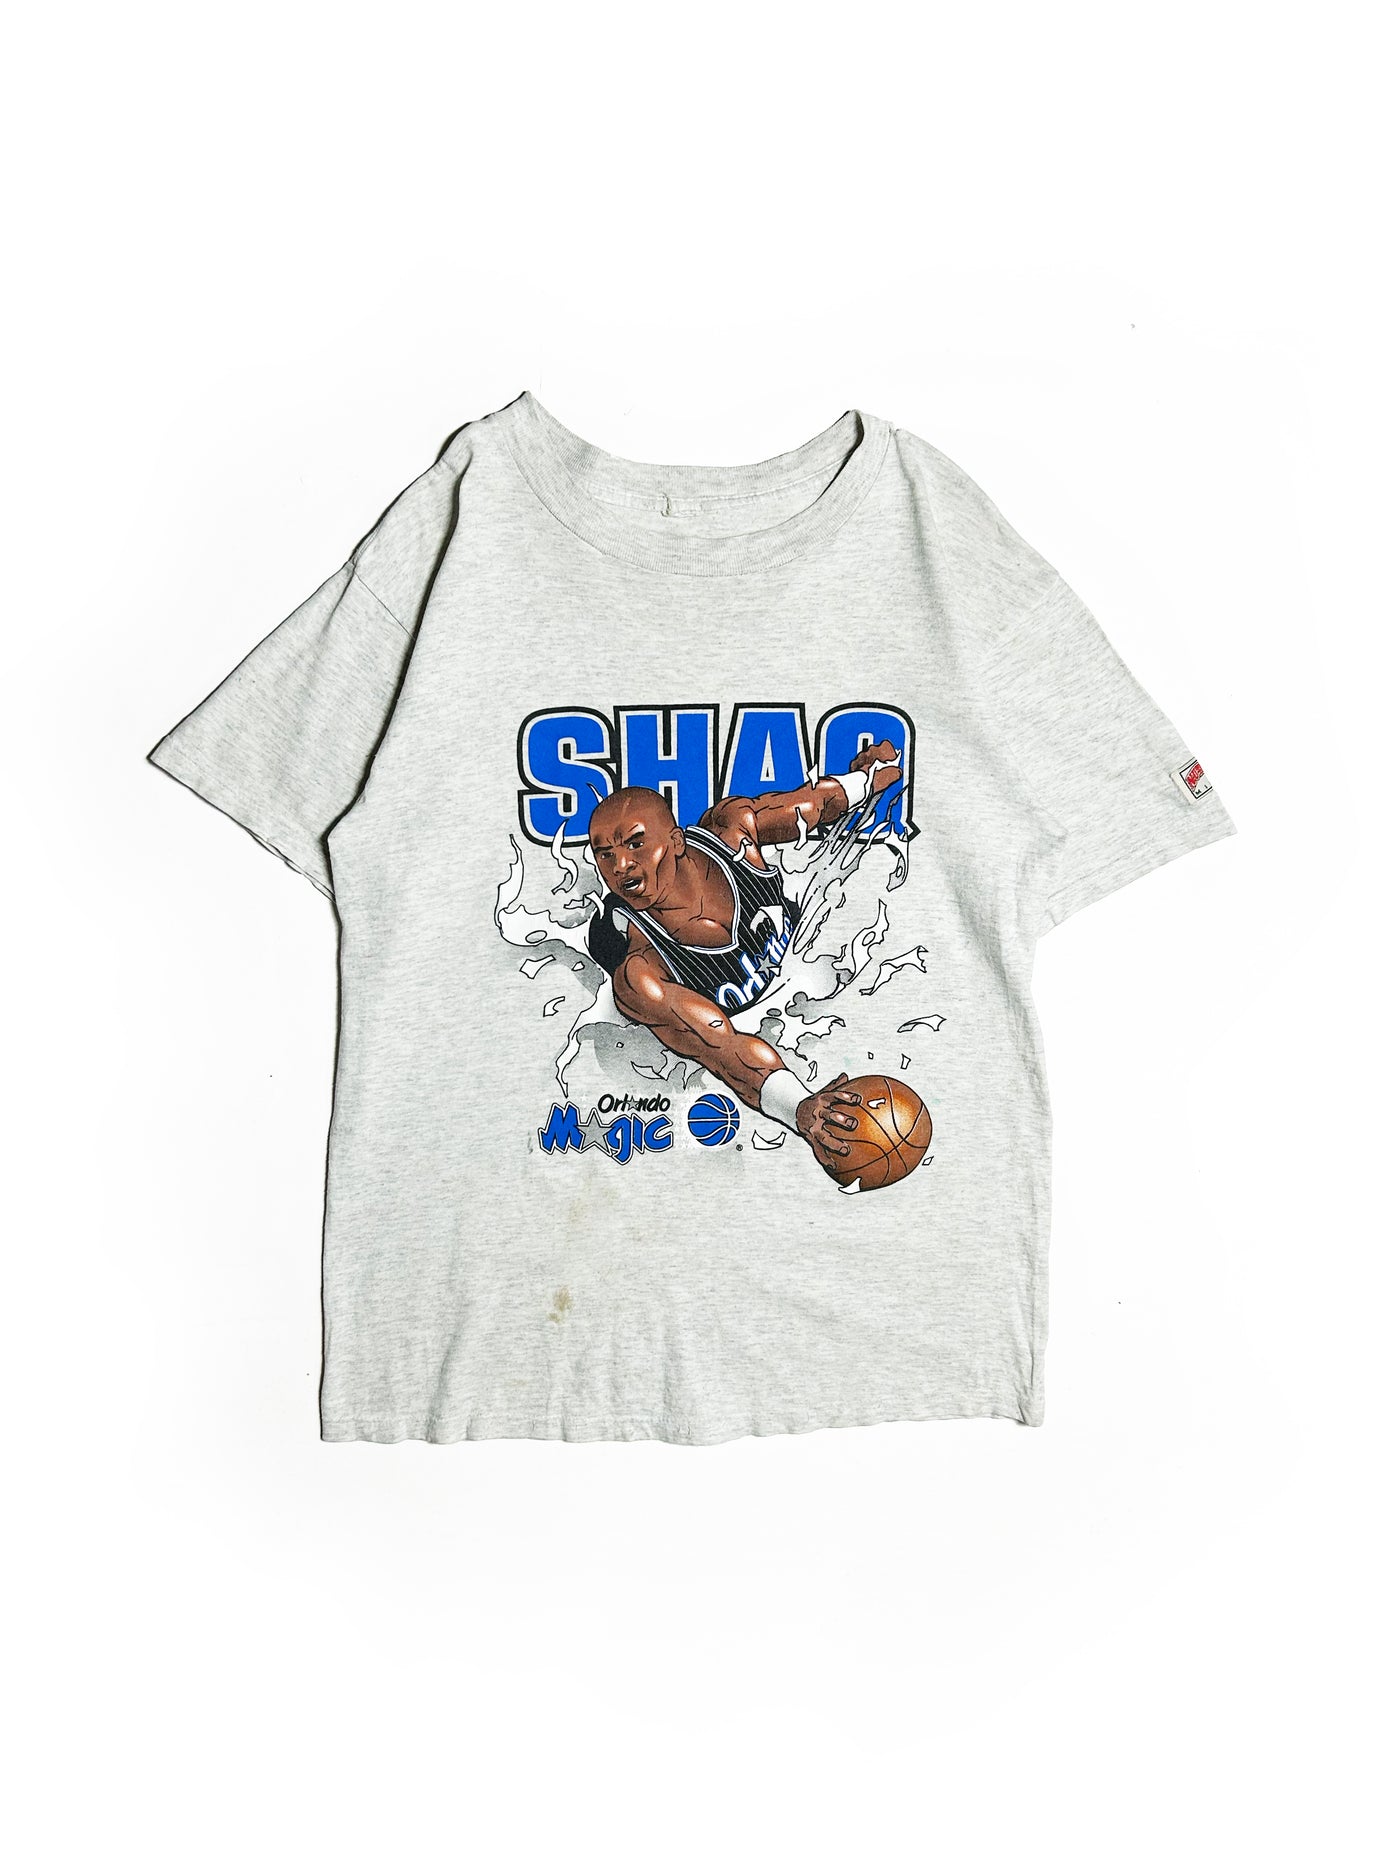 Vintage 90s Shaq Break Through Nutmeg T-Shirt